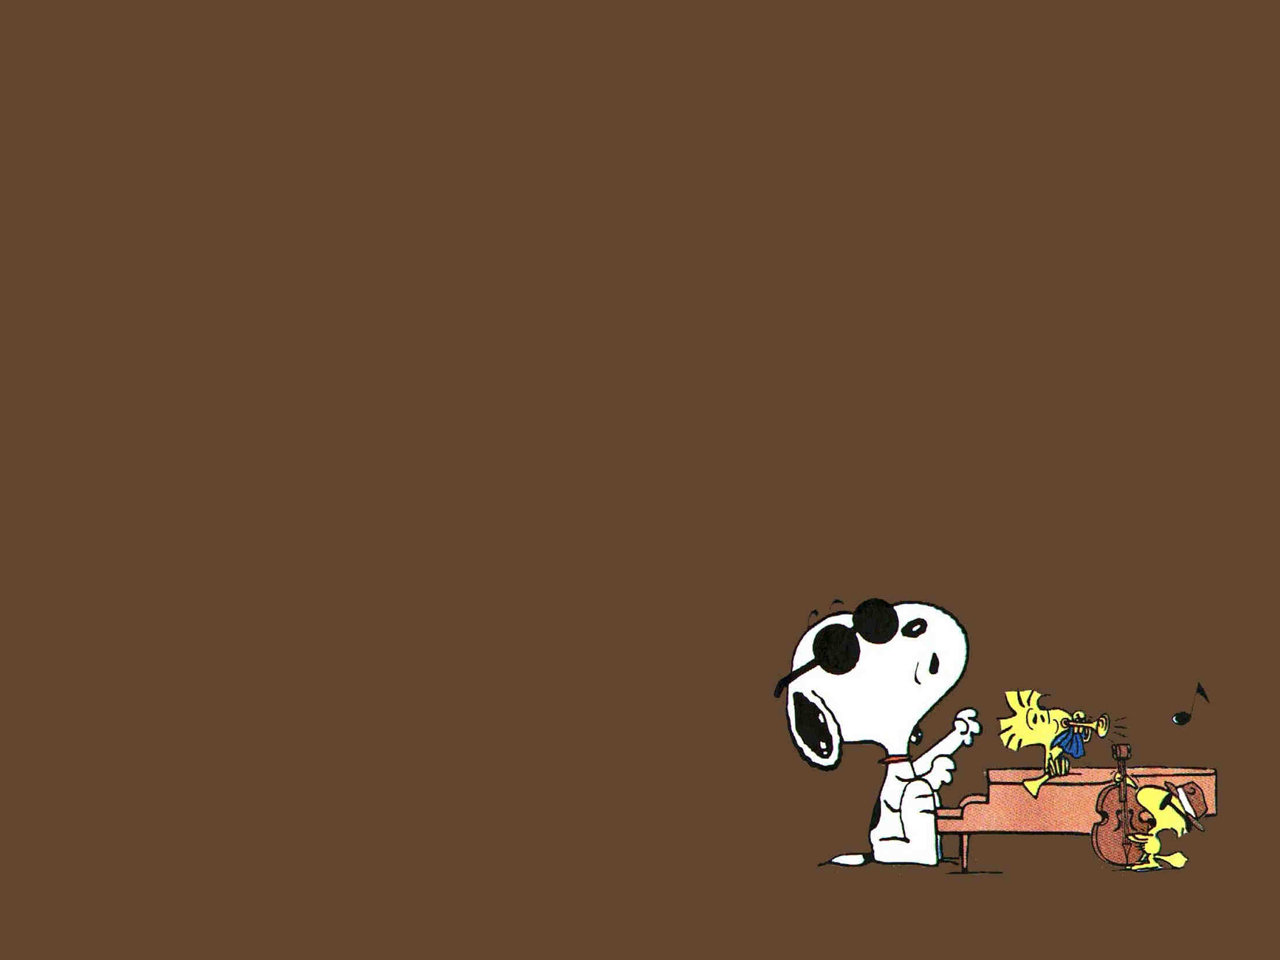 Woodstock Snoopy Wallpaper Image